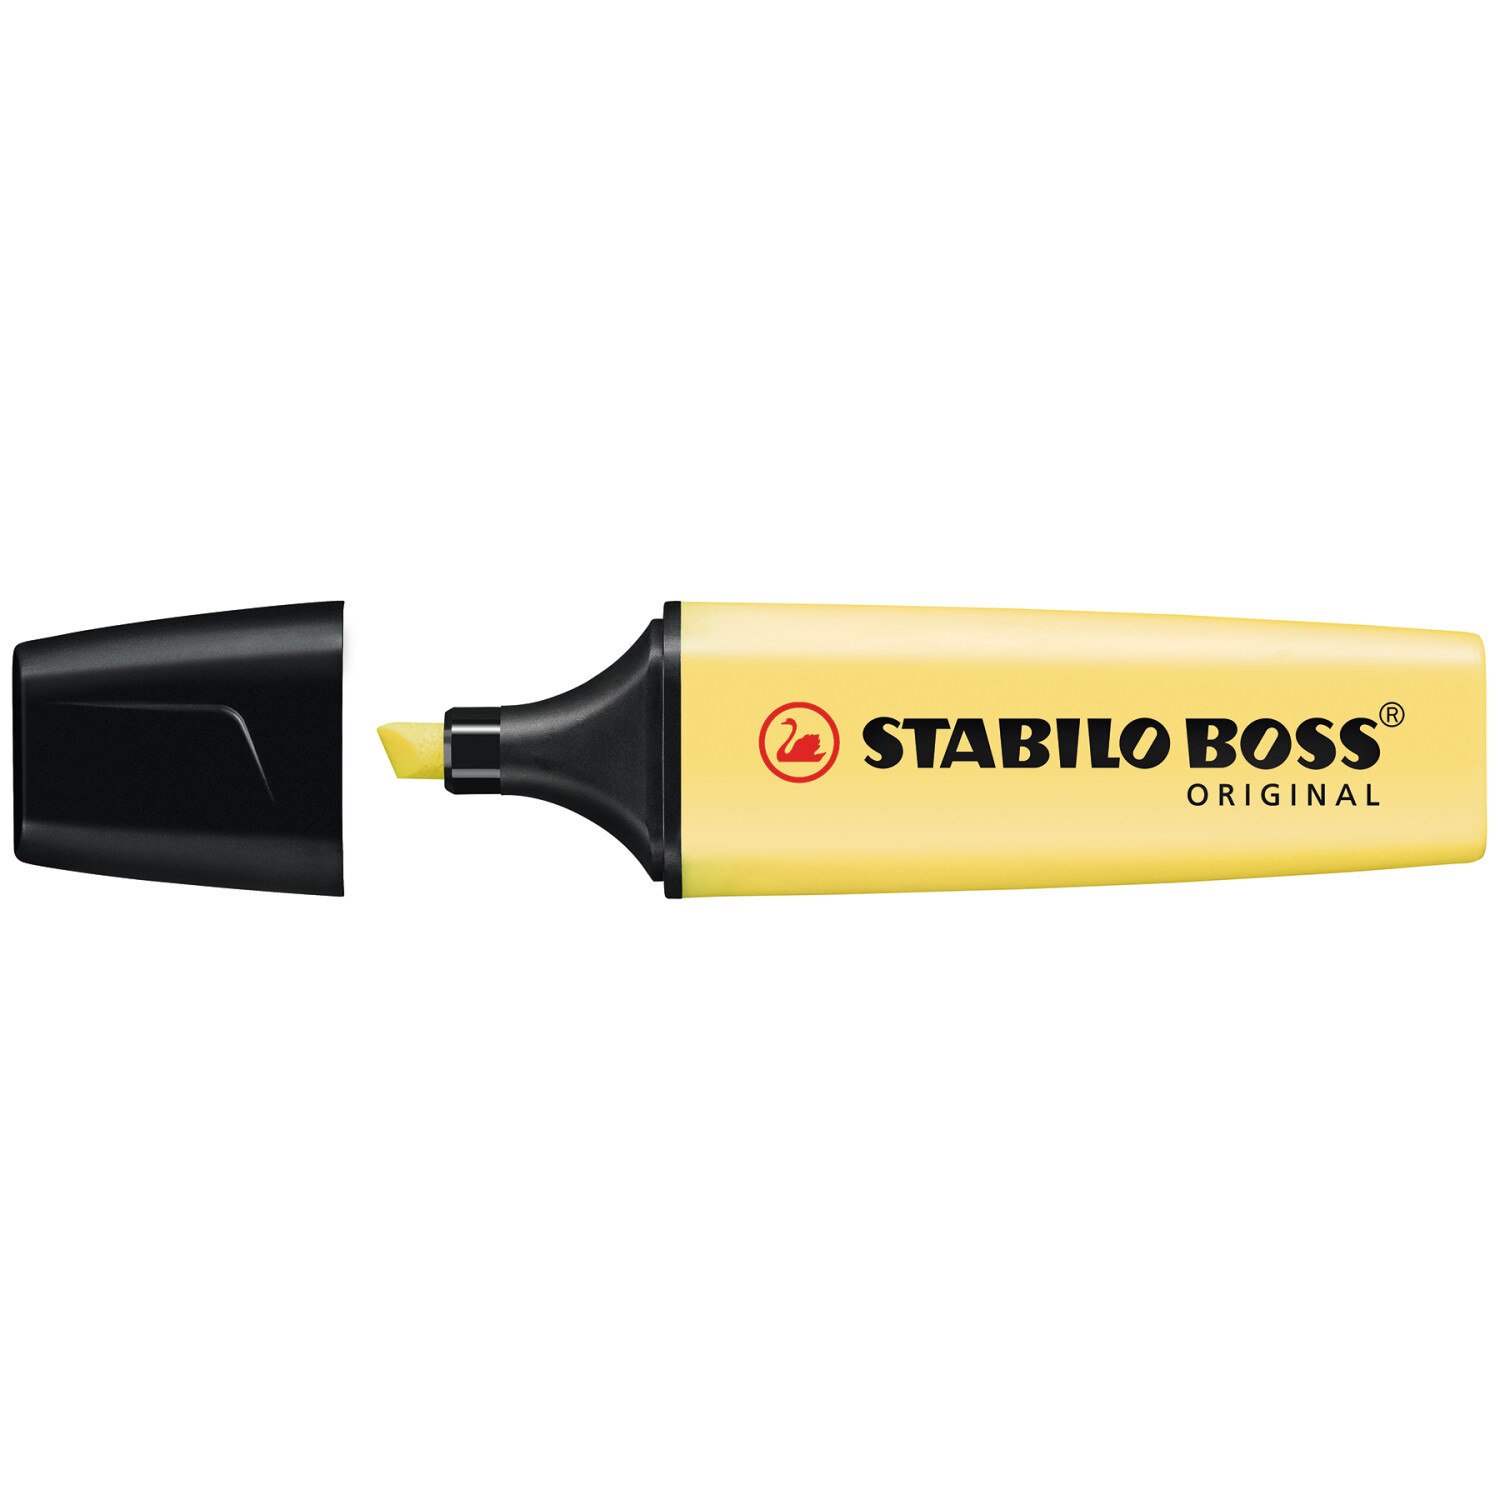 STABILO BOSS ORIGINAL Yellow Highlighter